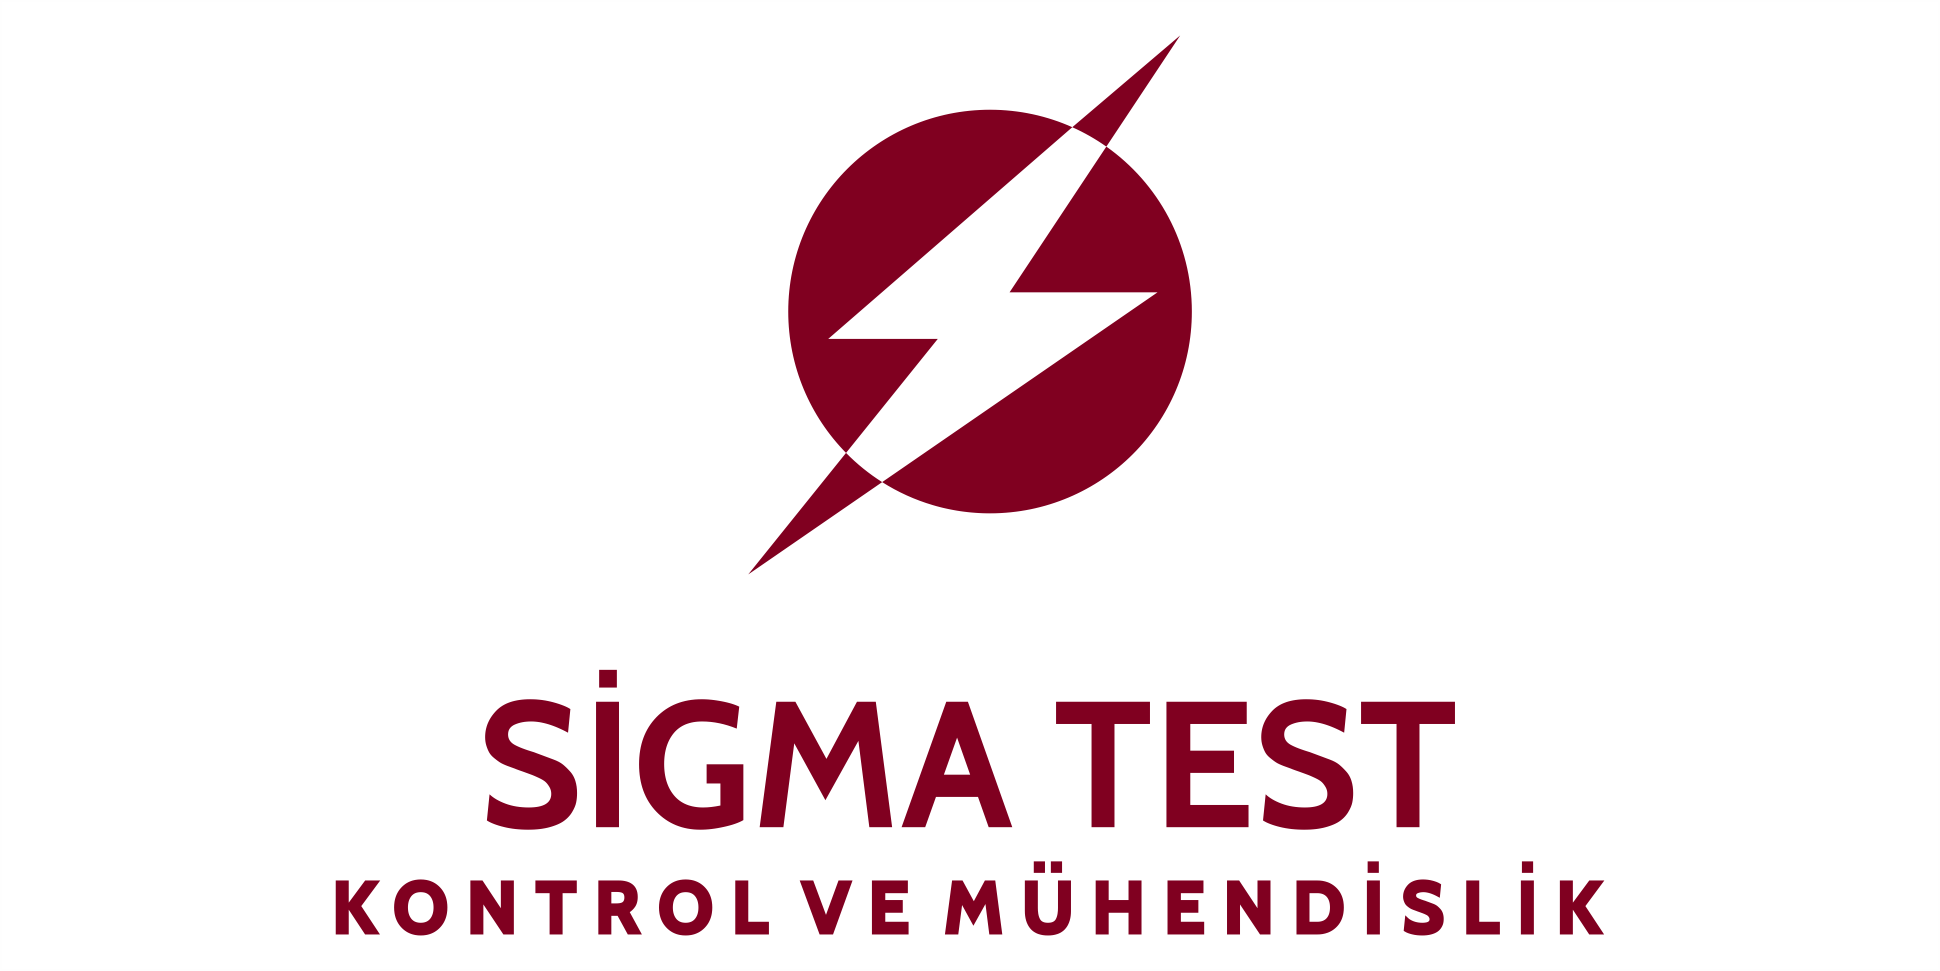 3 / Sigma Test Kontrol